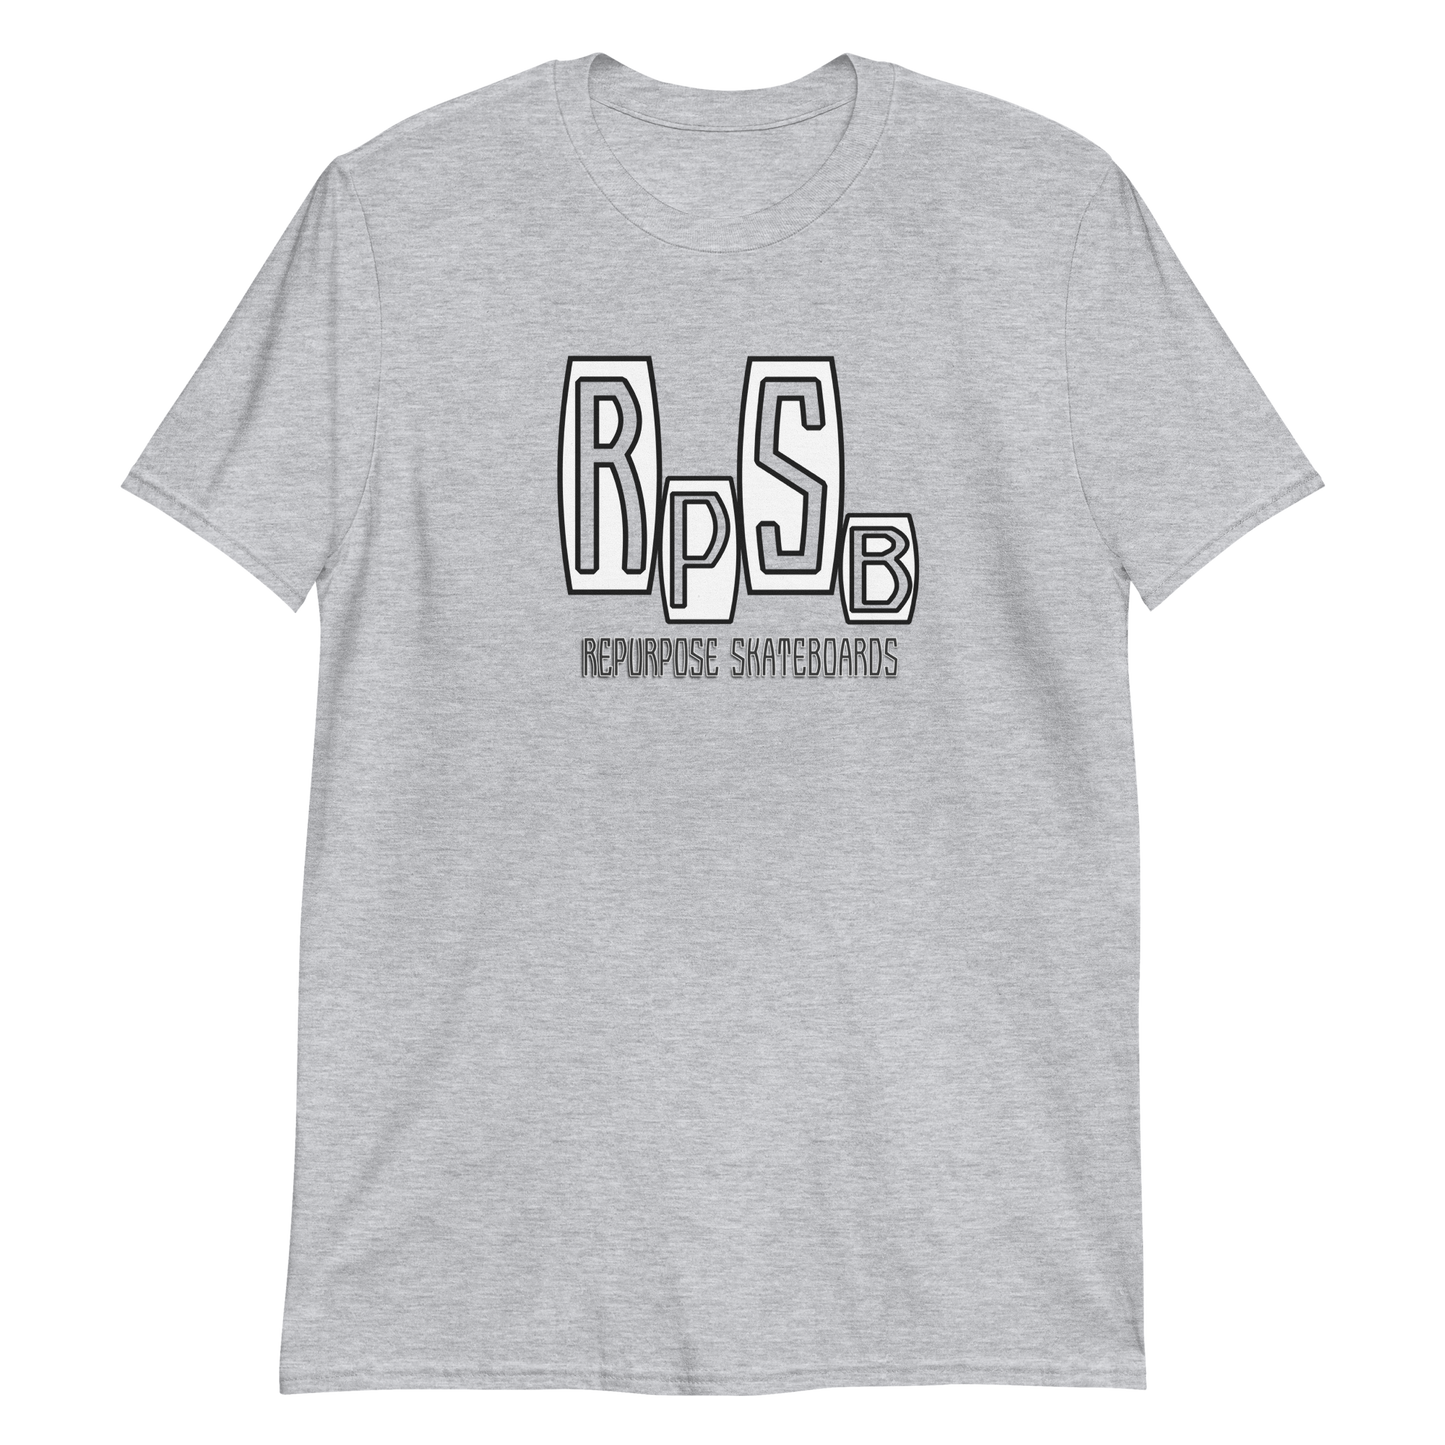 RpSb T-Shirt